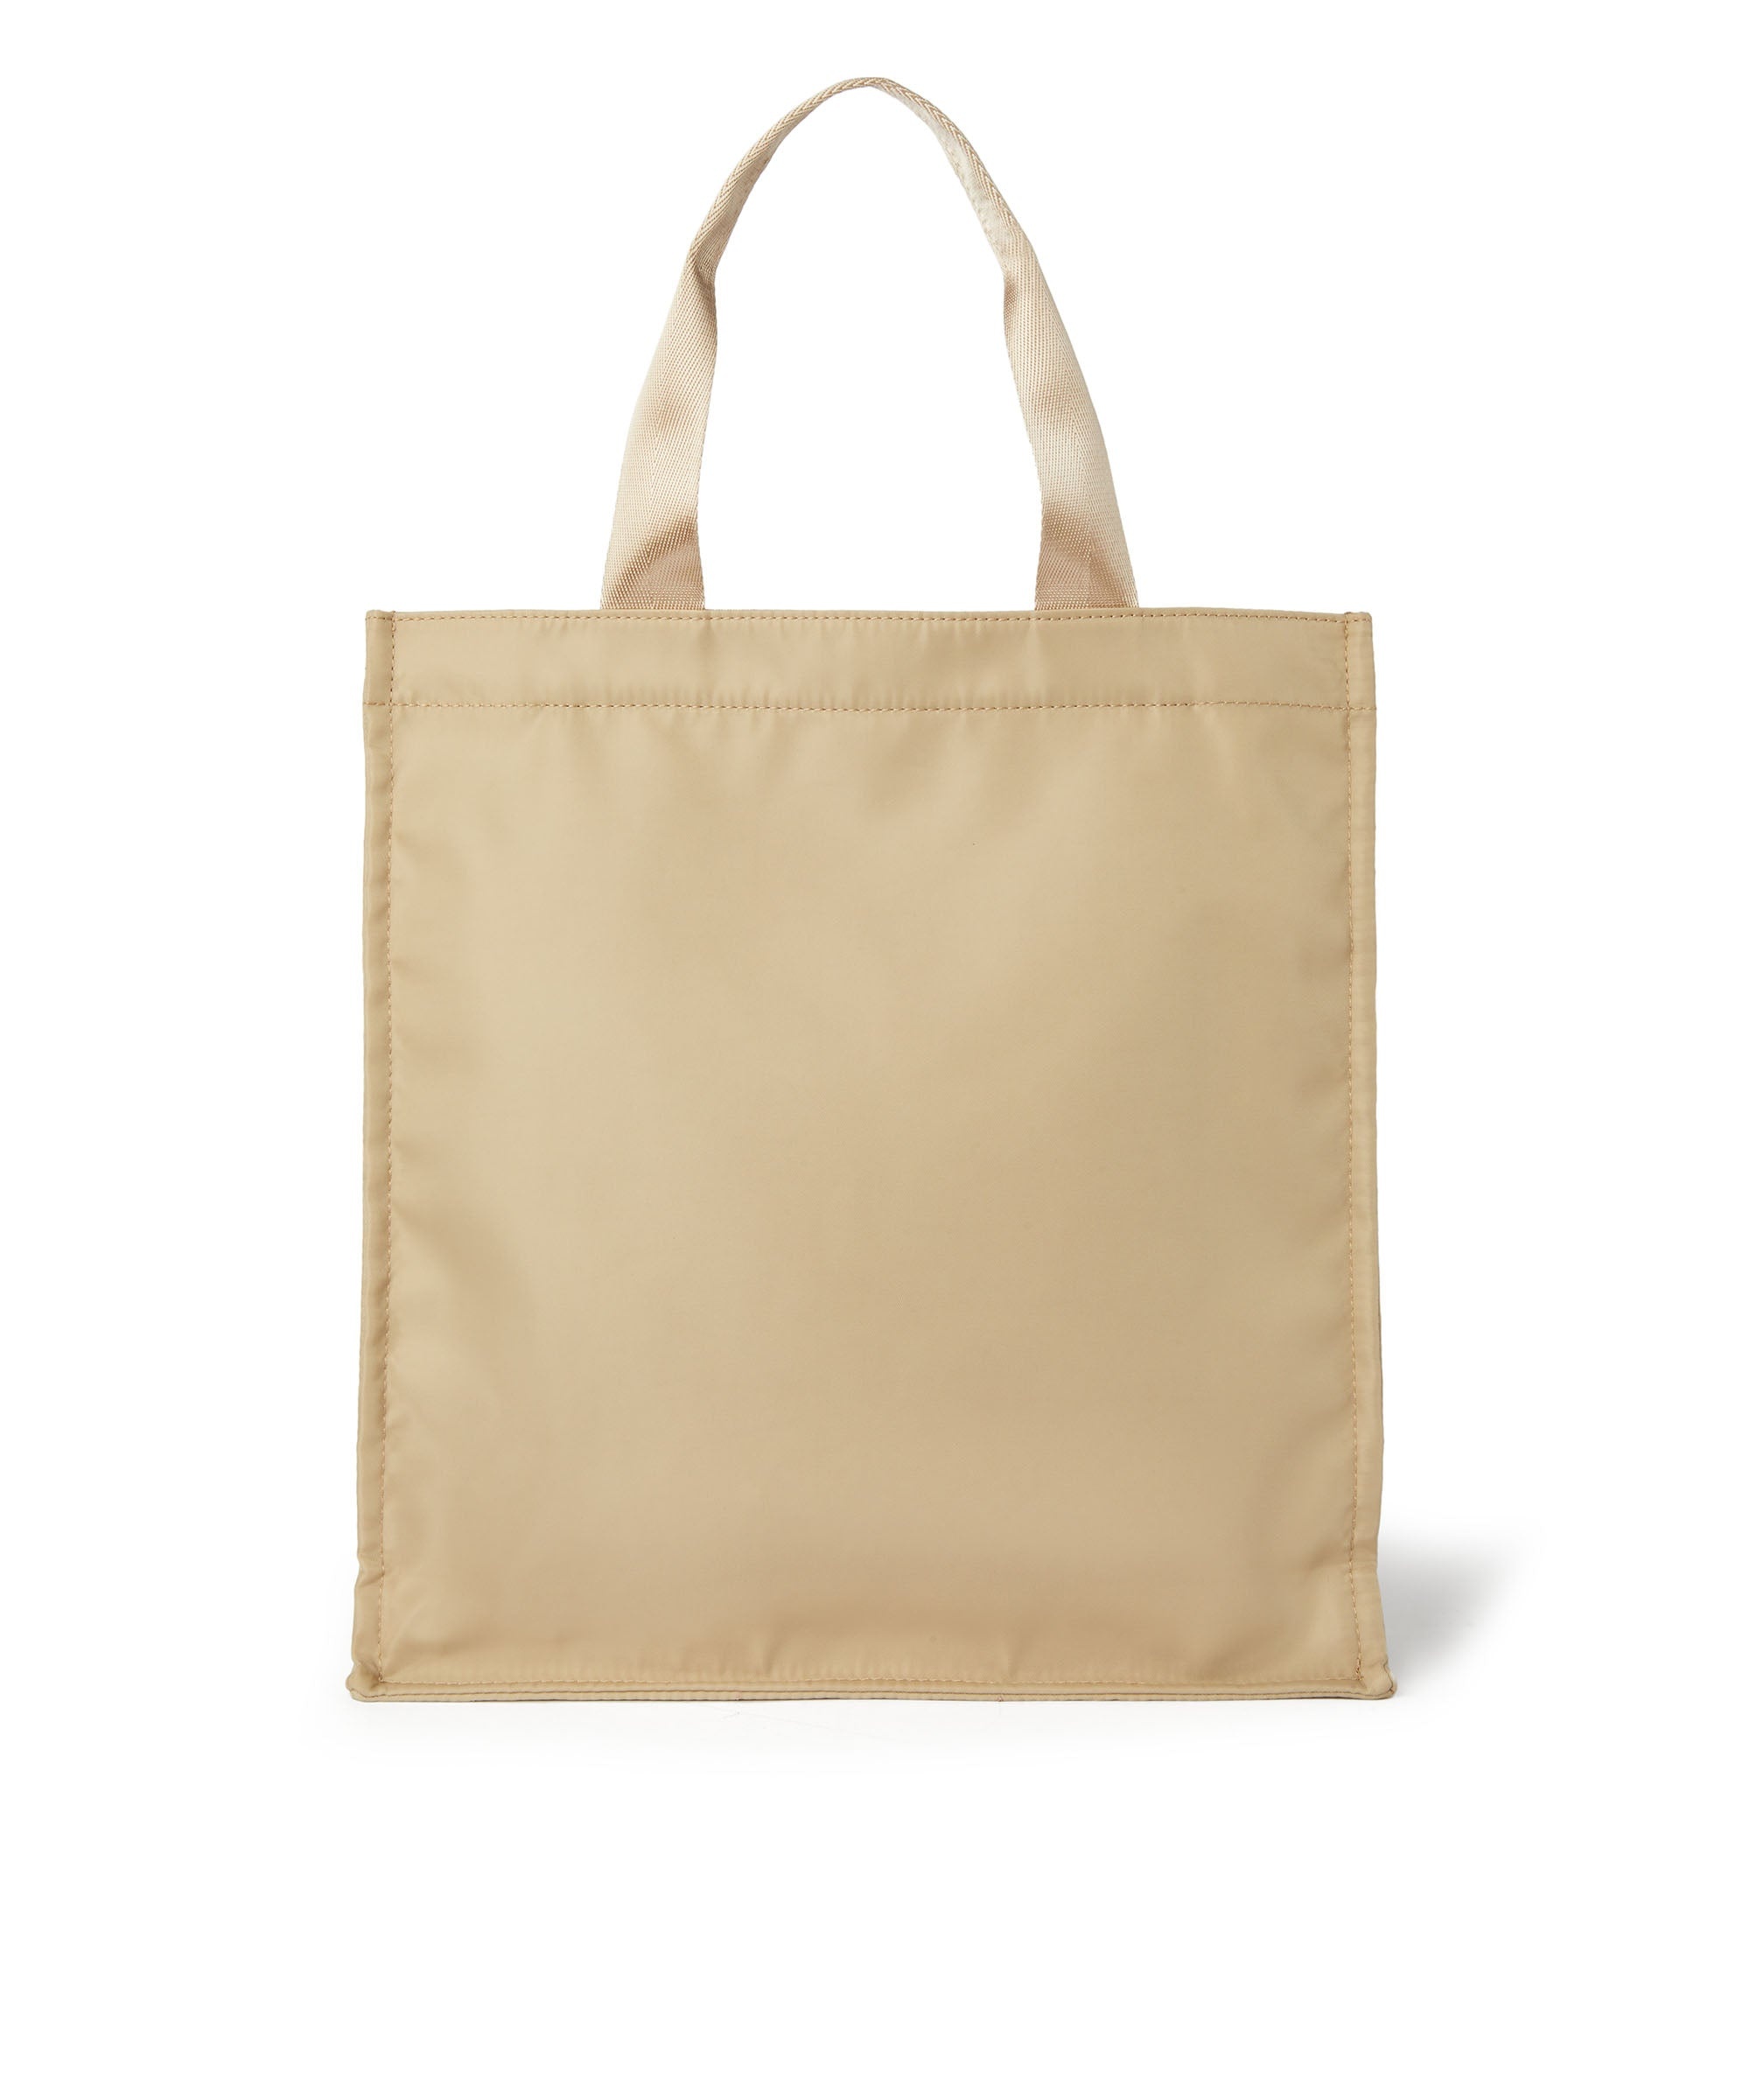 Nylon tote bag with logo - 2